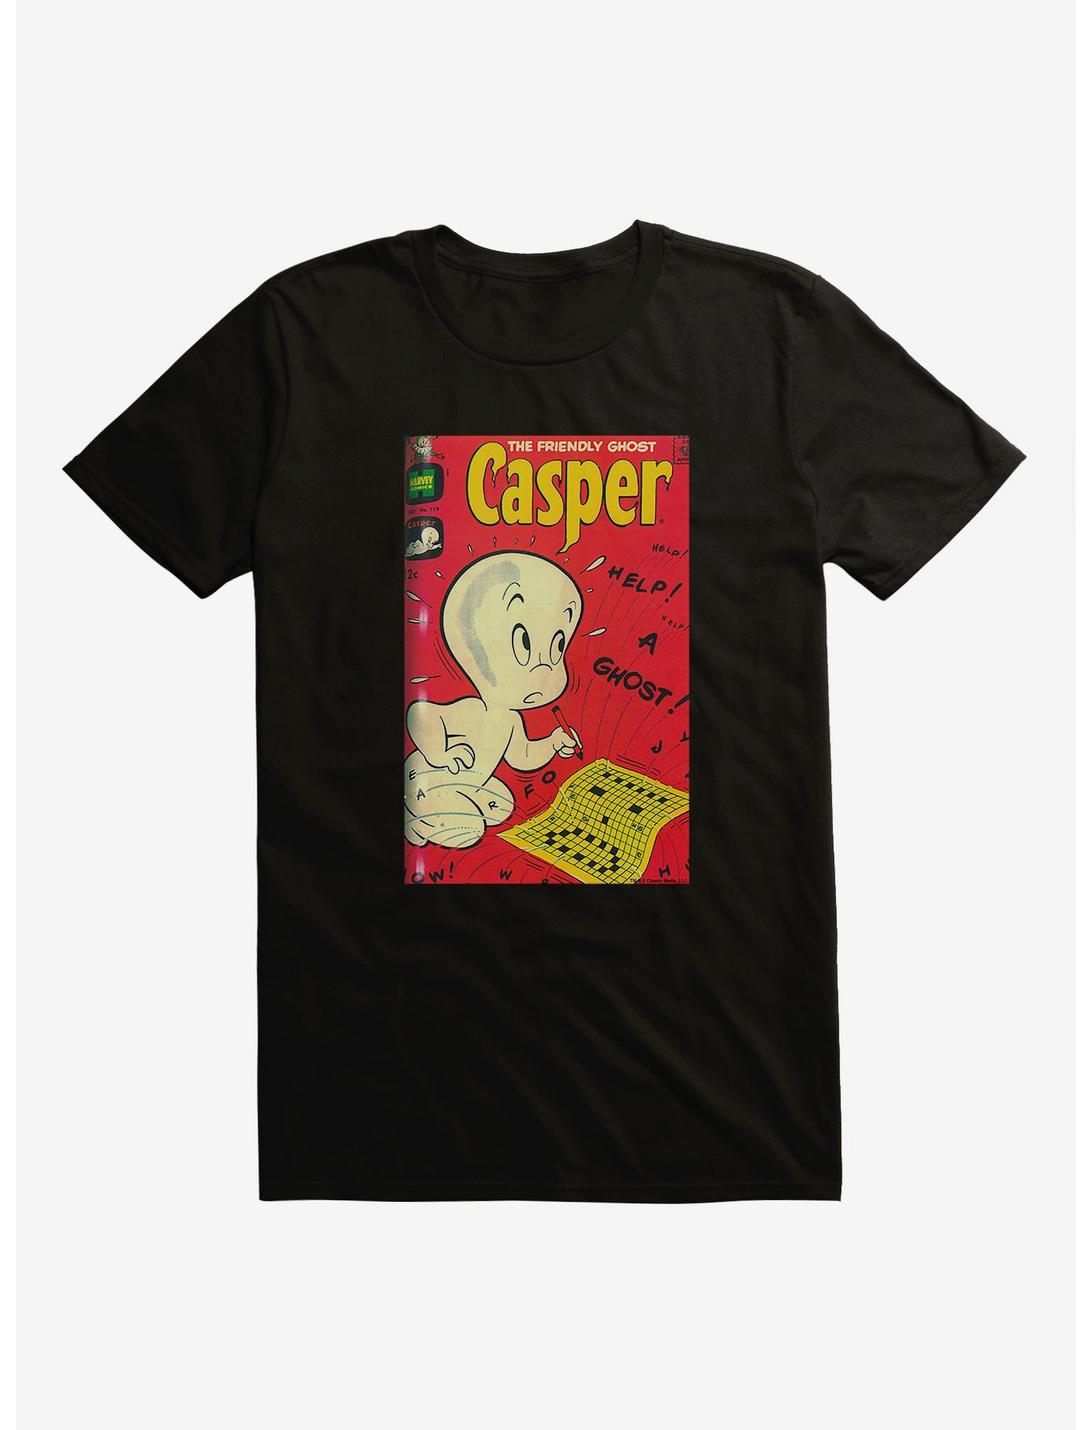 Casper The Friendly Ghost "Help! A Ghost!" Comic Cover T-Shirt, BLACK, hi-res